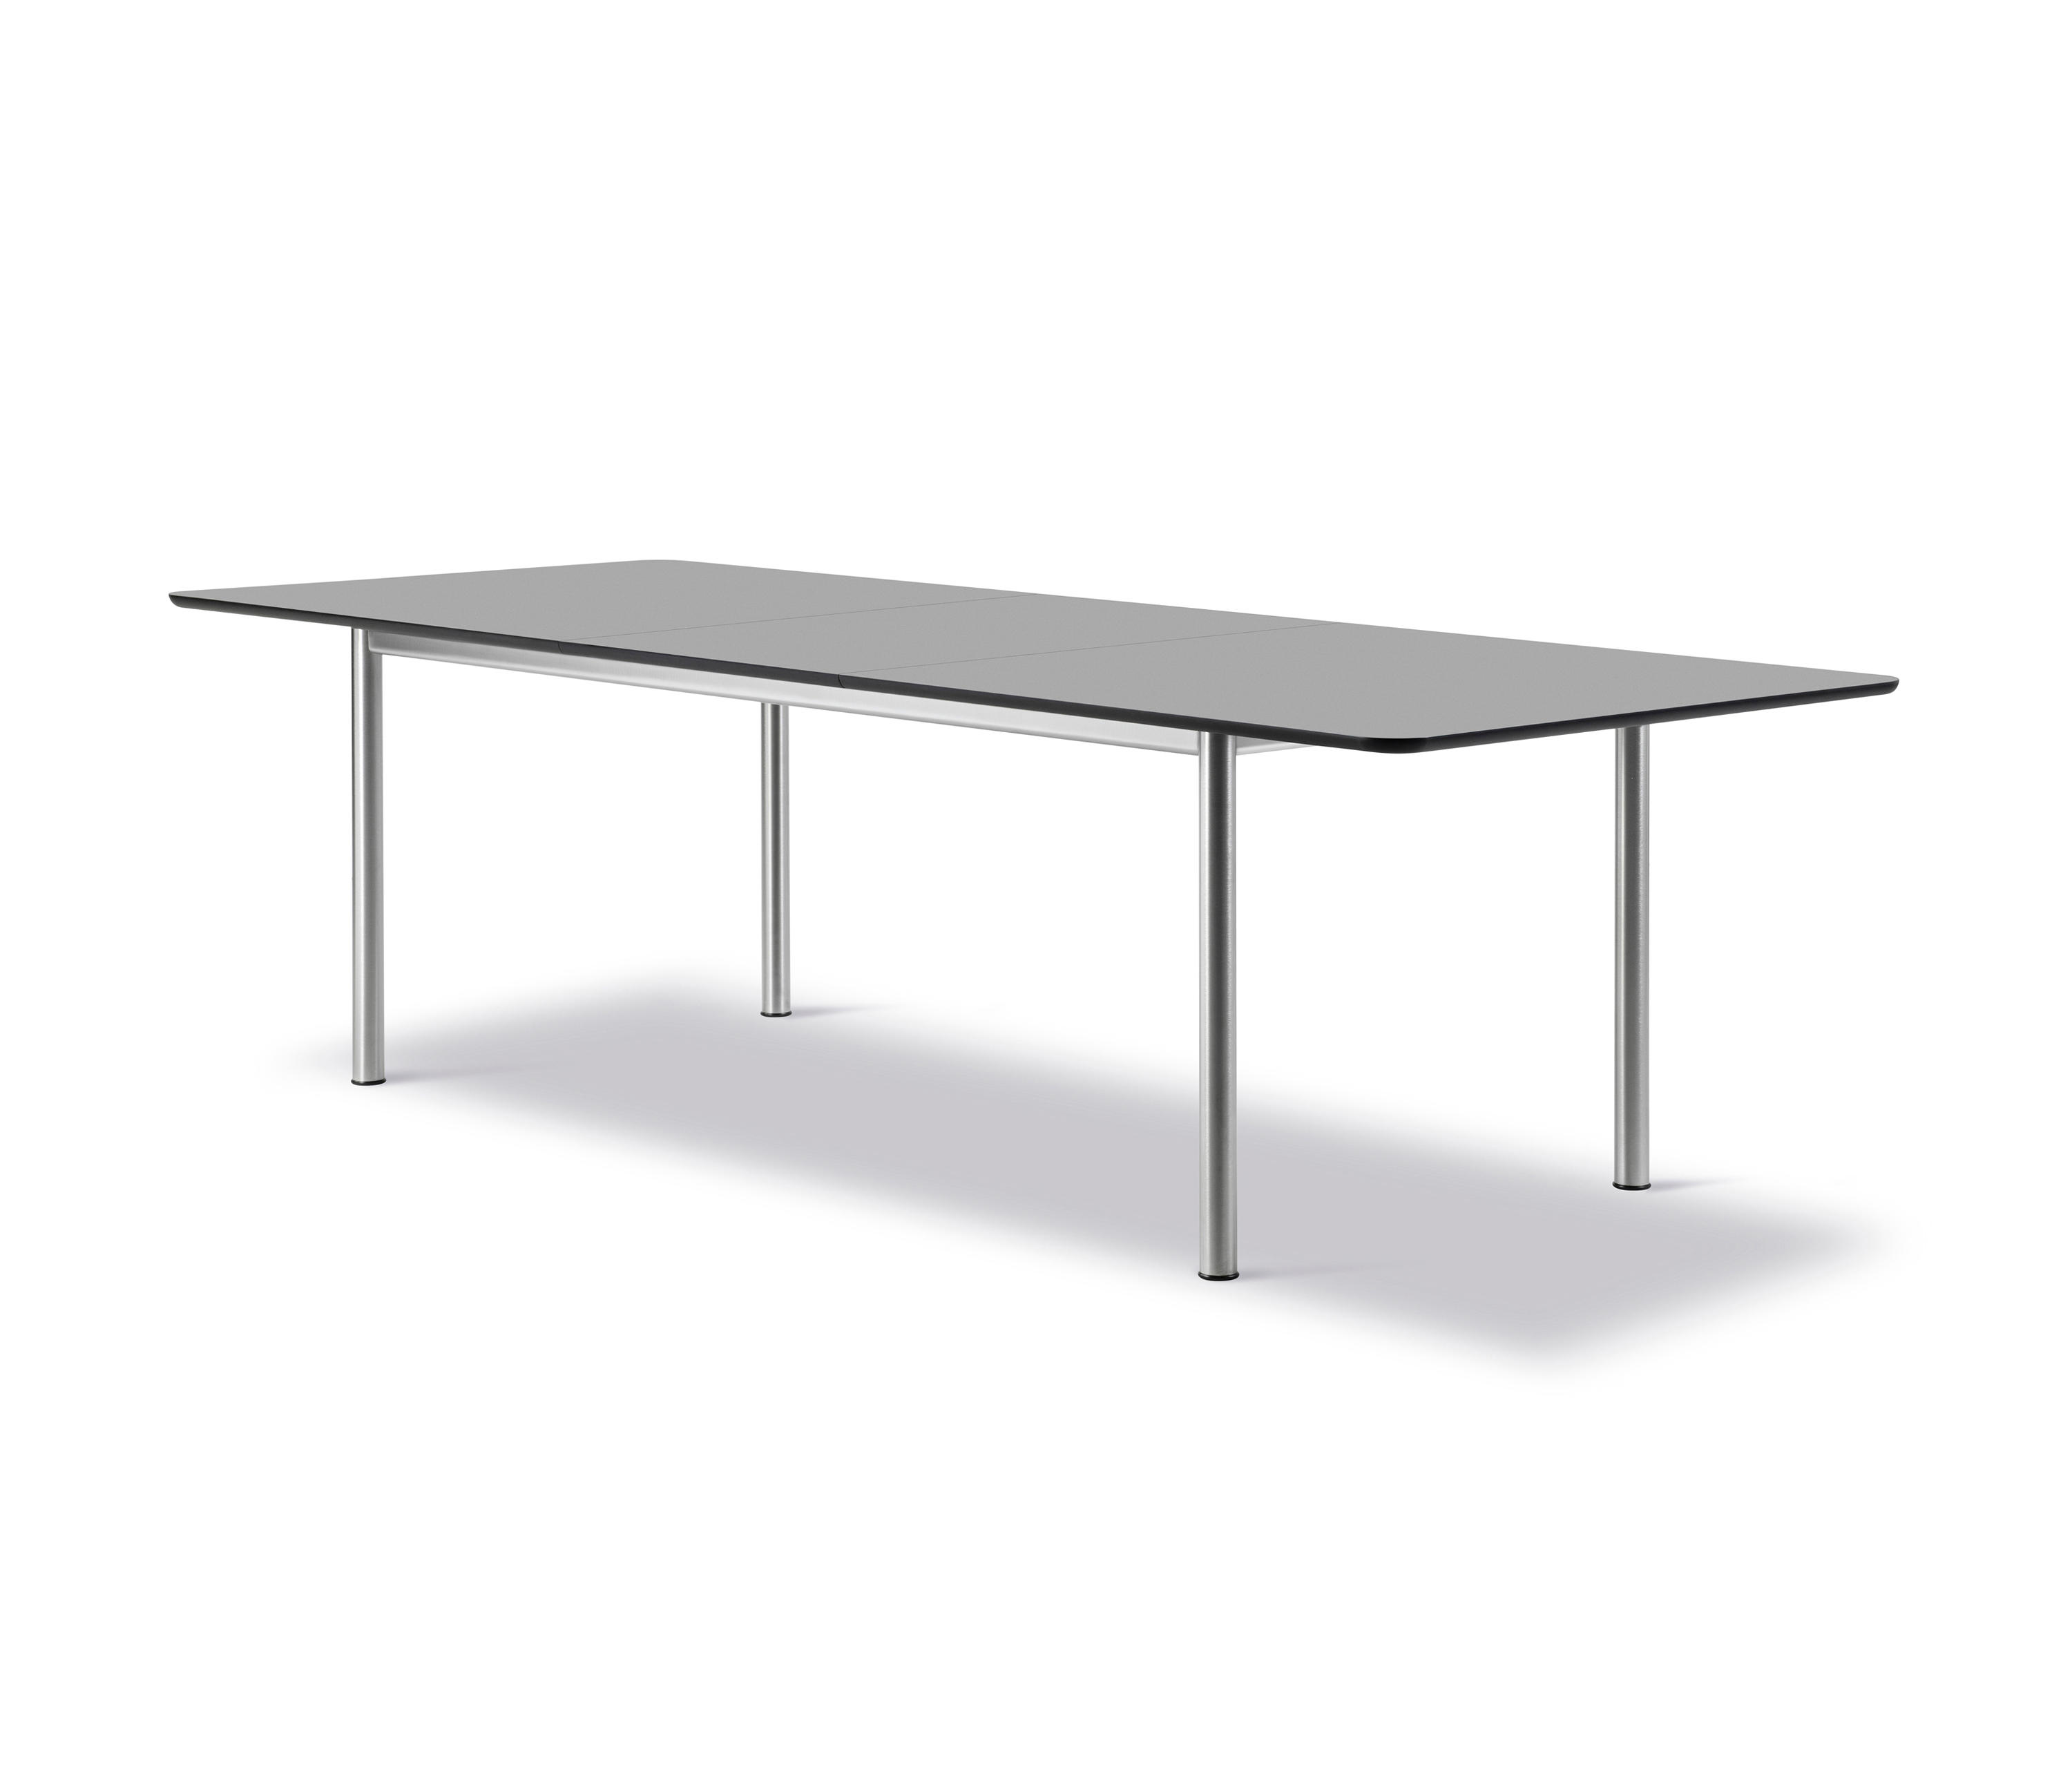 Plan Table Extendable & designer furniture | Architonic